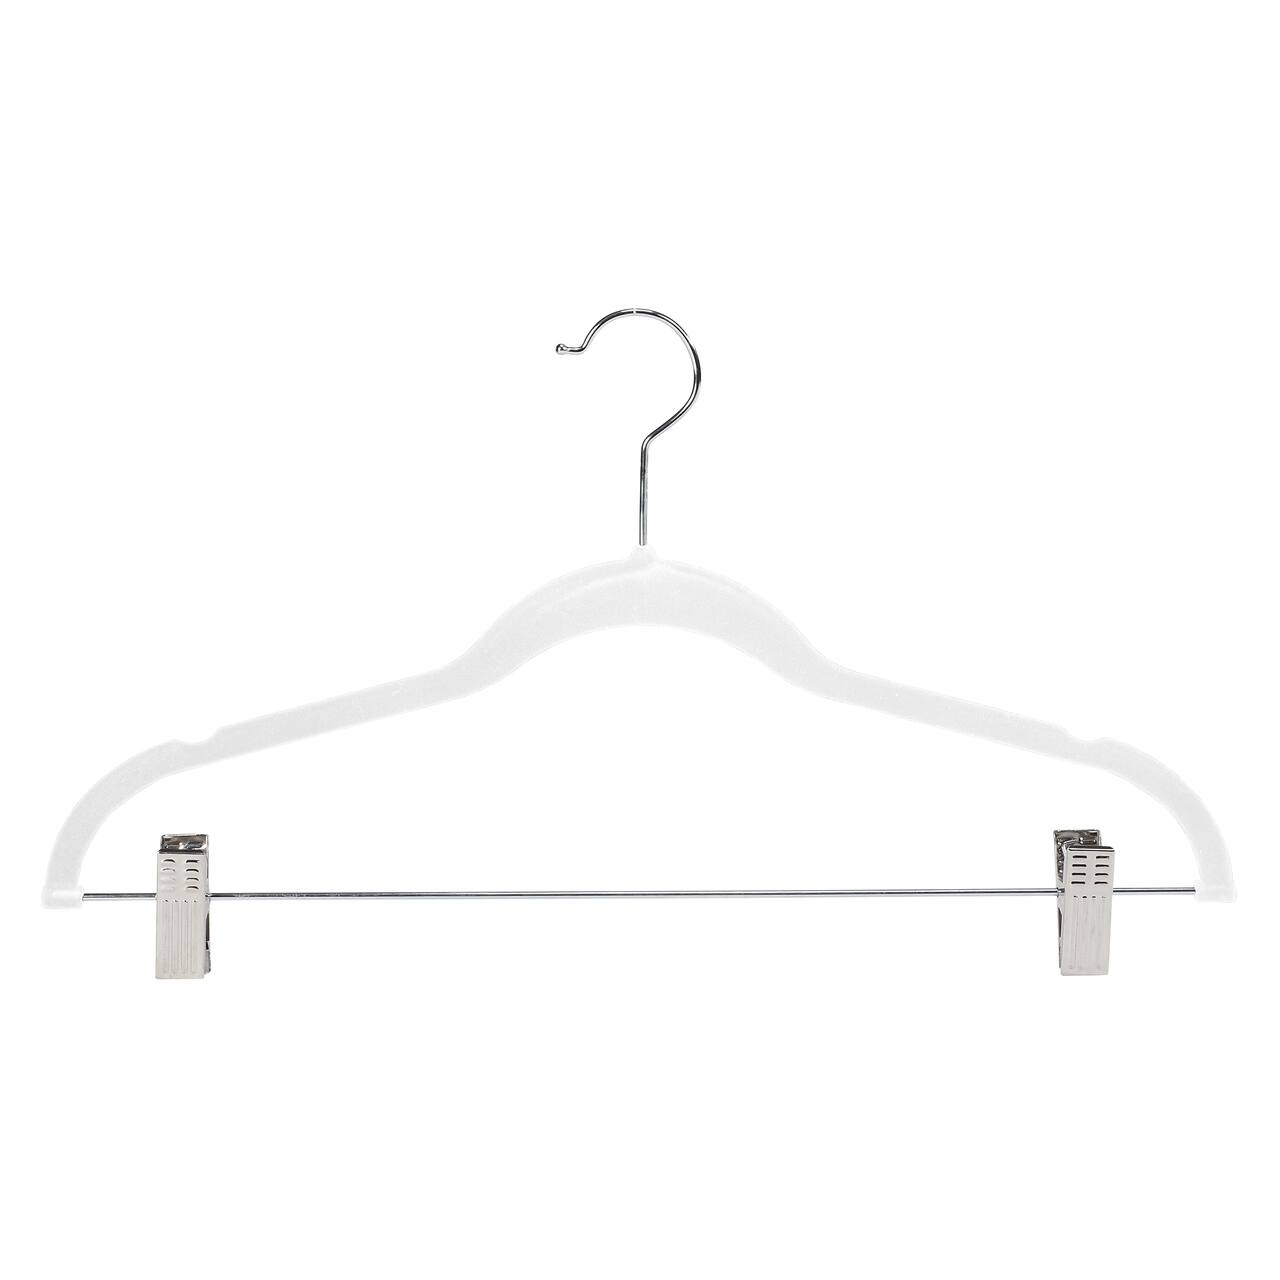 Simplify Slim Velvet Hangers with Clips, 6ct.